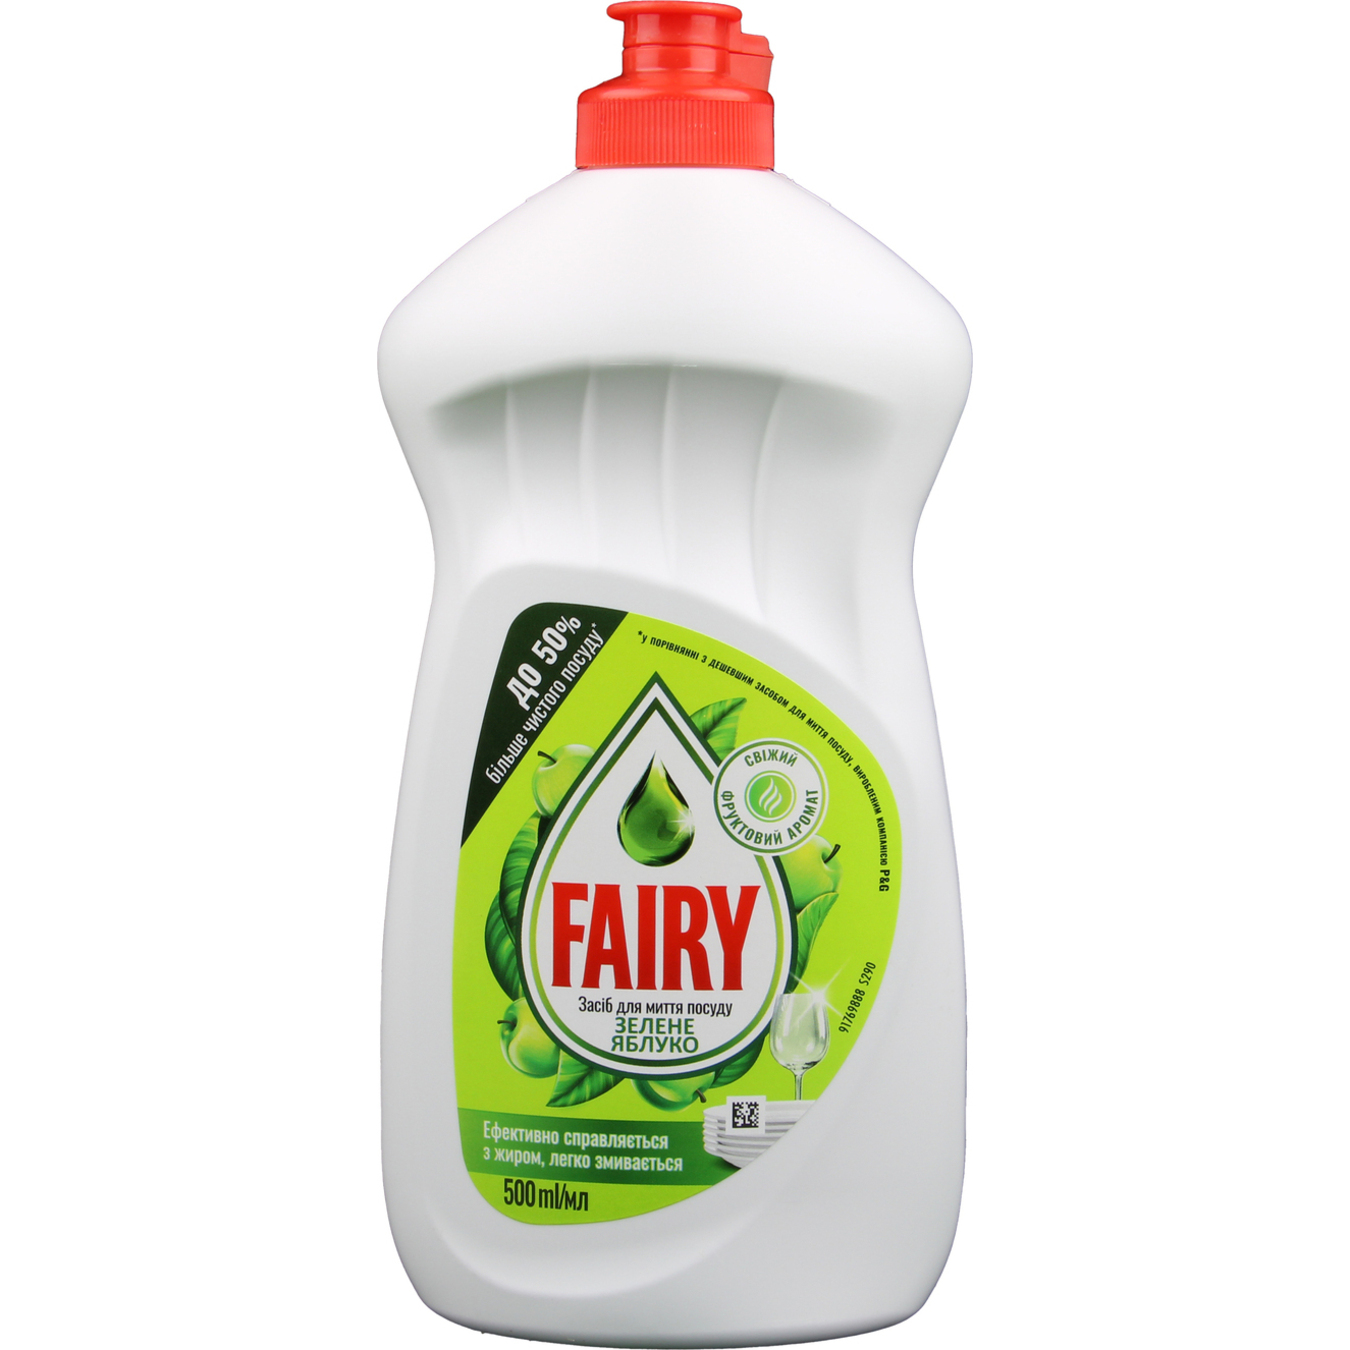 Fairy Green Apple Dihwashing Liquid 500ml